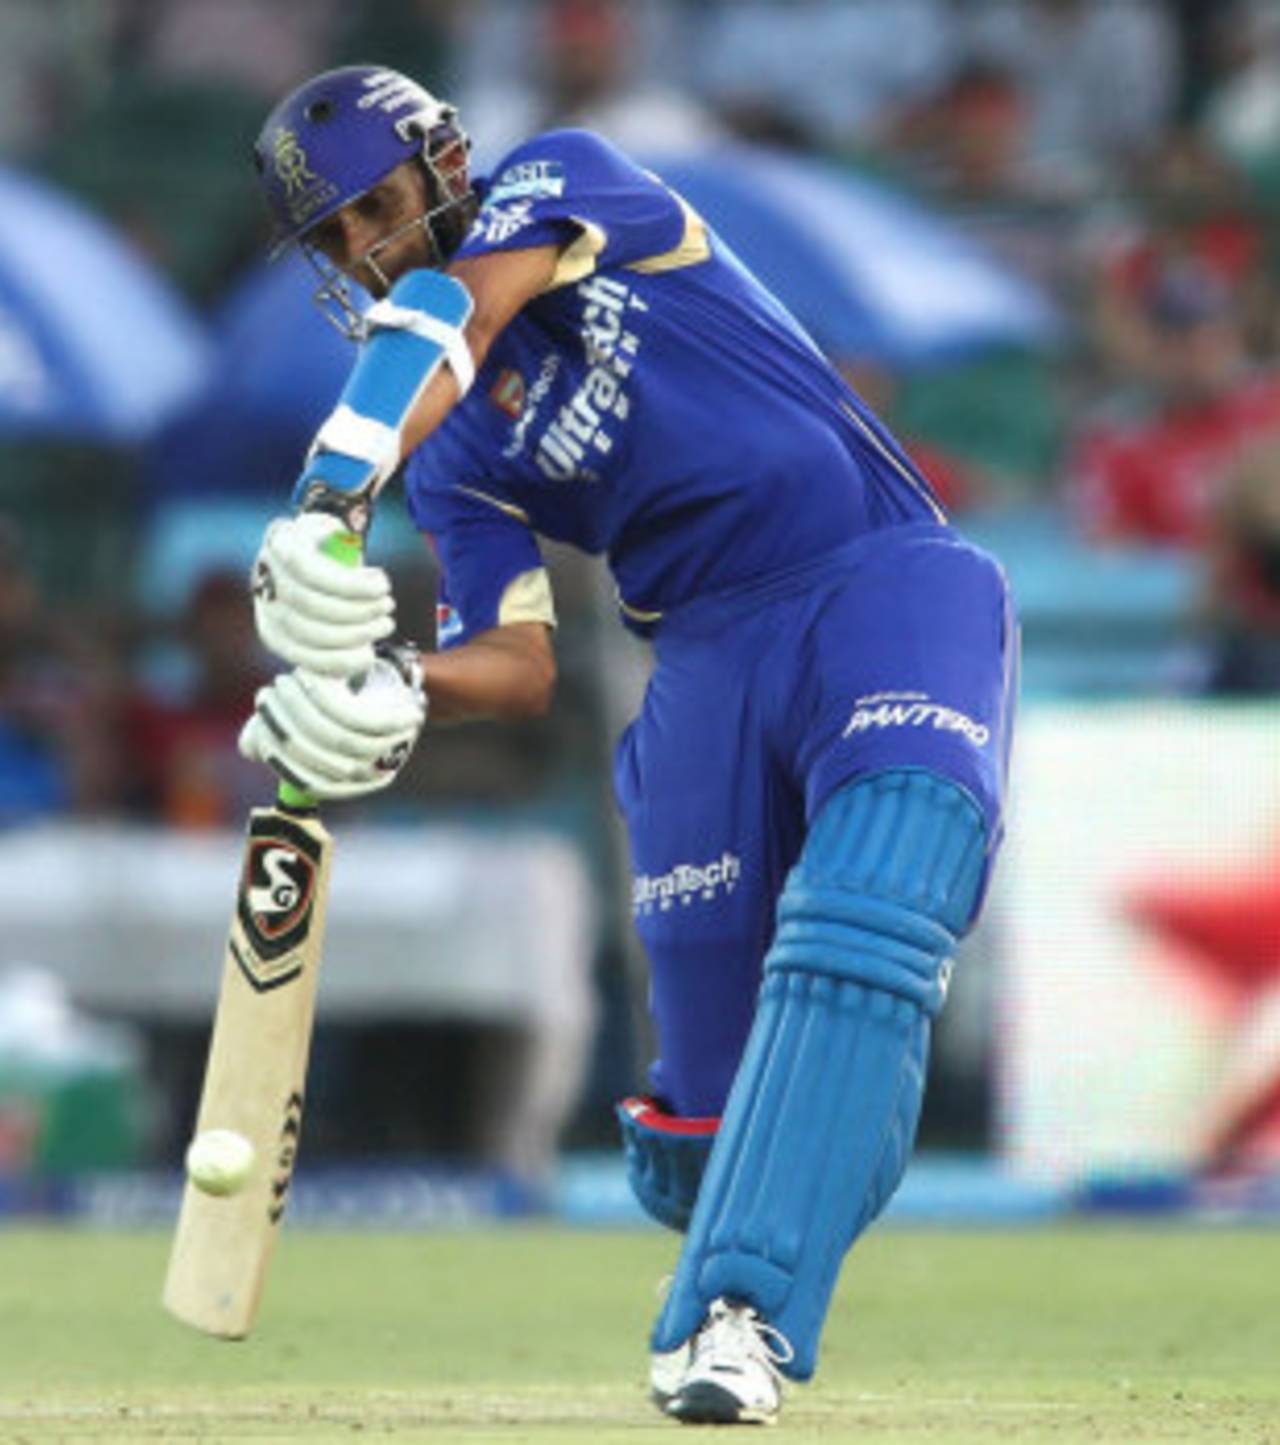 Rahul Dravid hit his second successive half-century, Rajasthan Royals v Delhi Daredevils, IPL, Jaipur, May 7, 2013